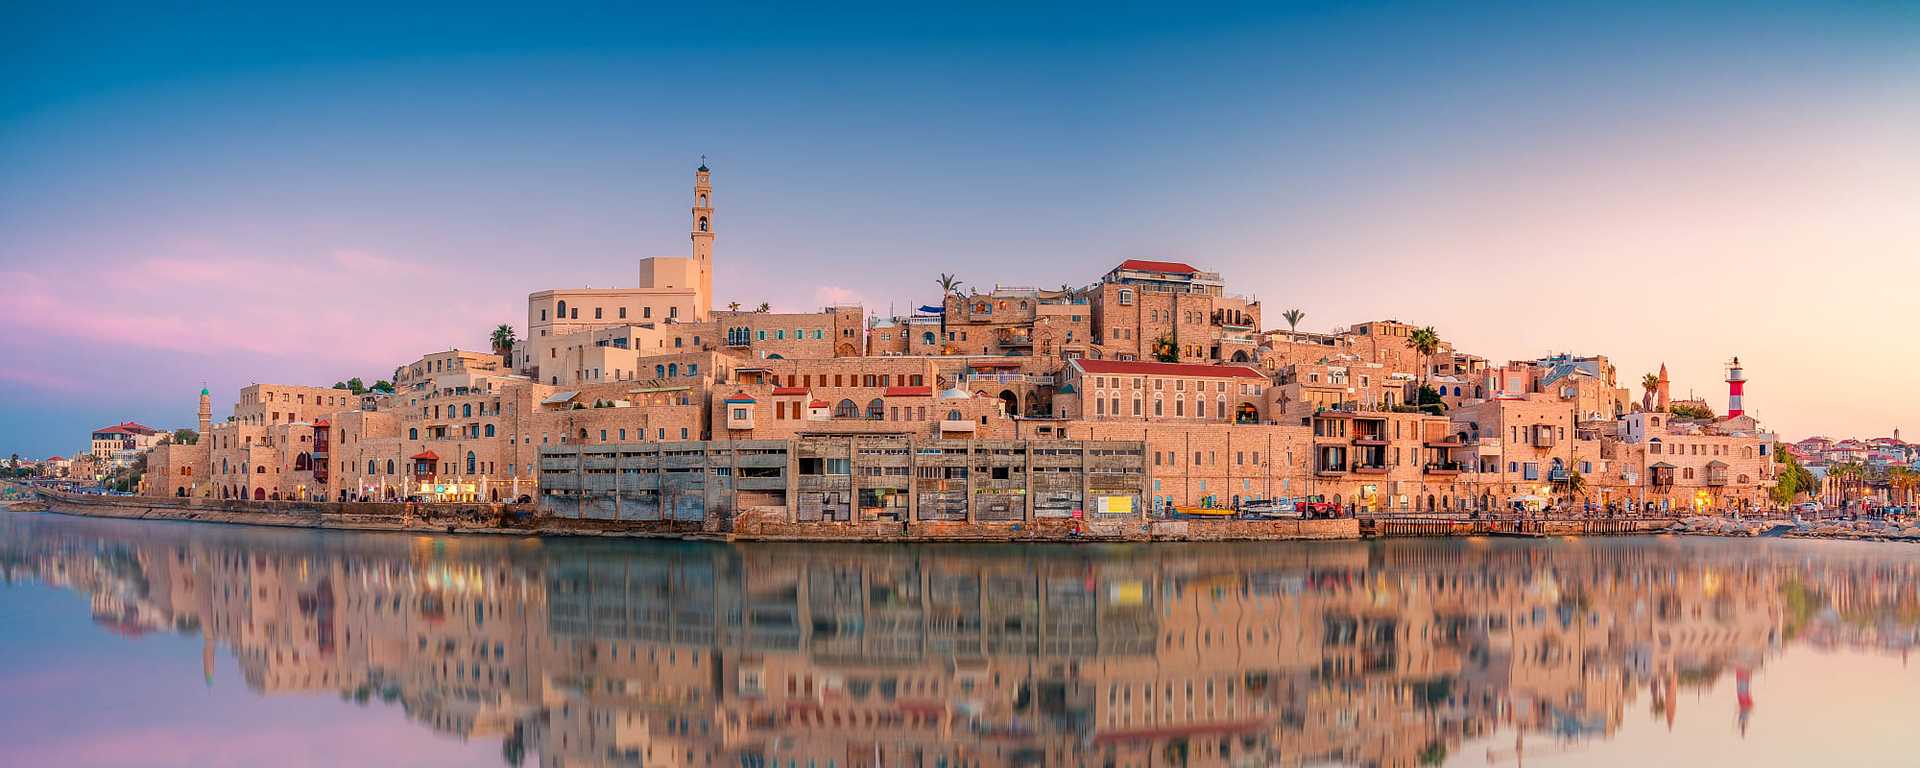 Jaffa port and Old City in Tel Aviv, Israel